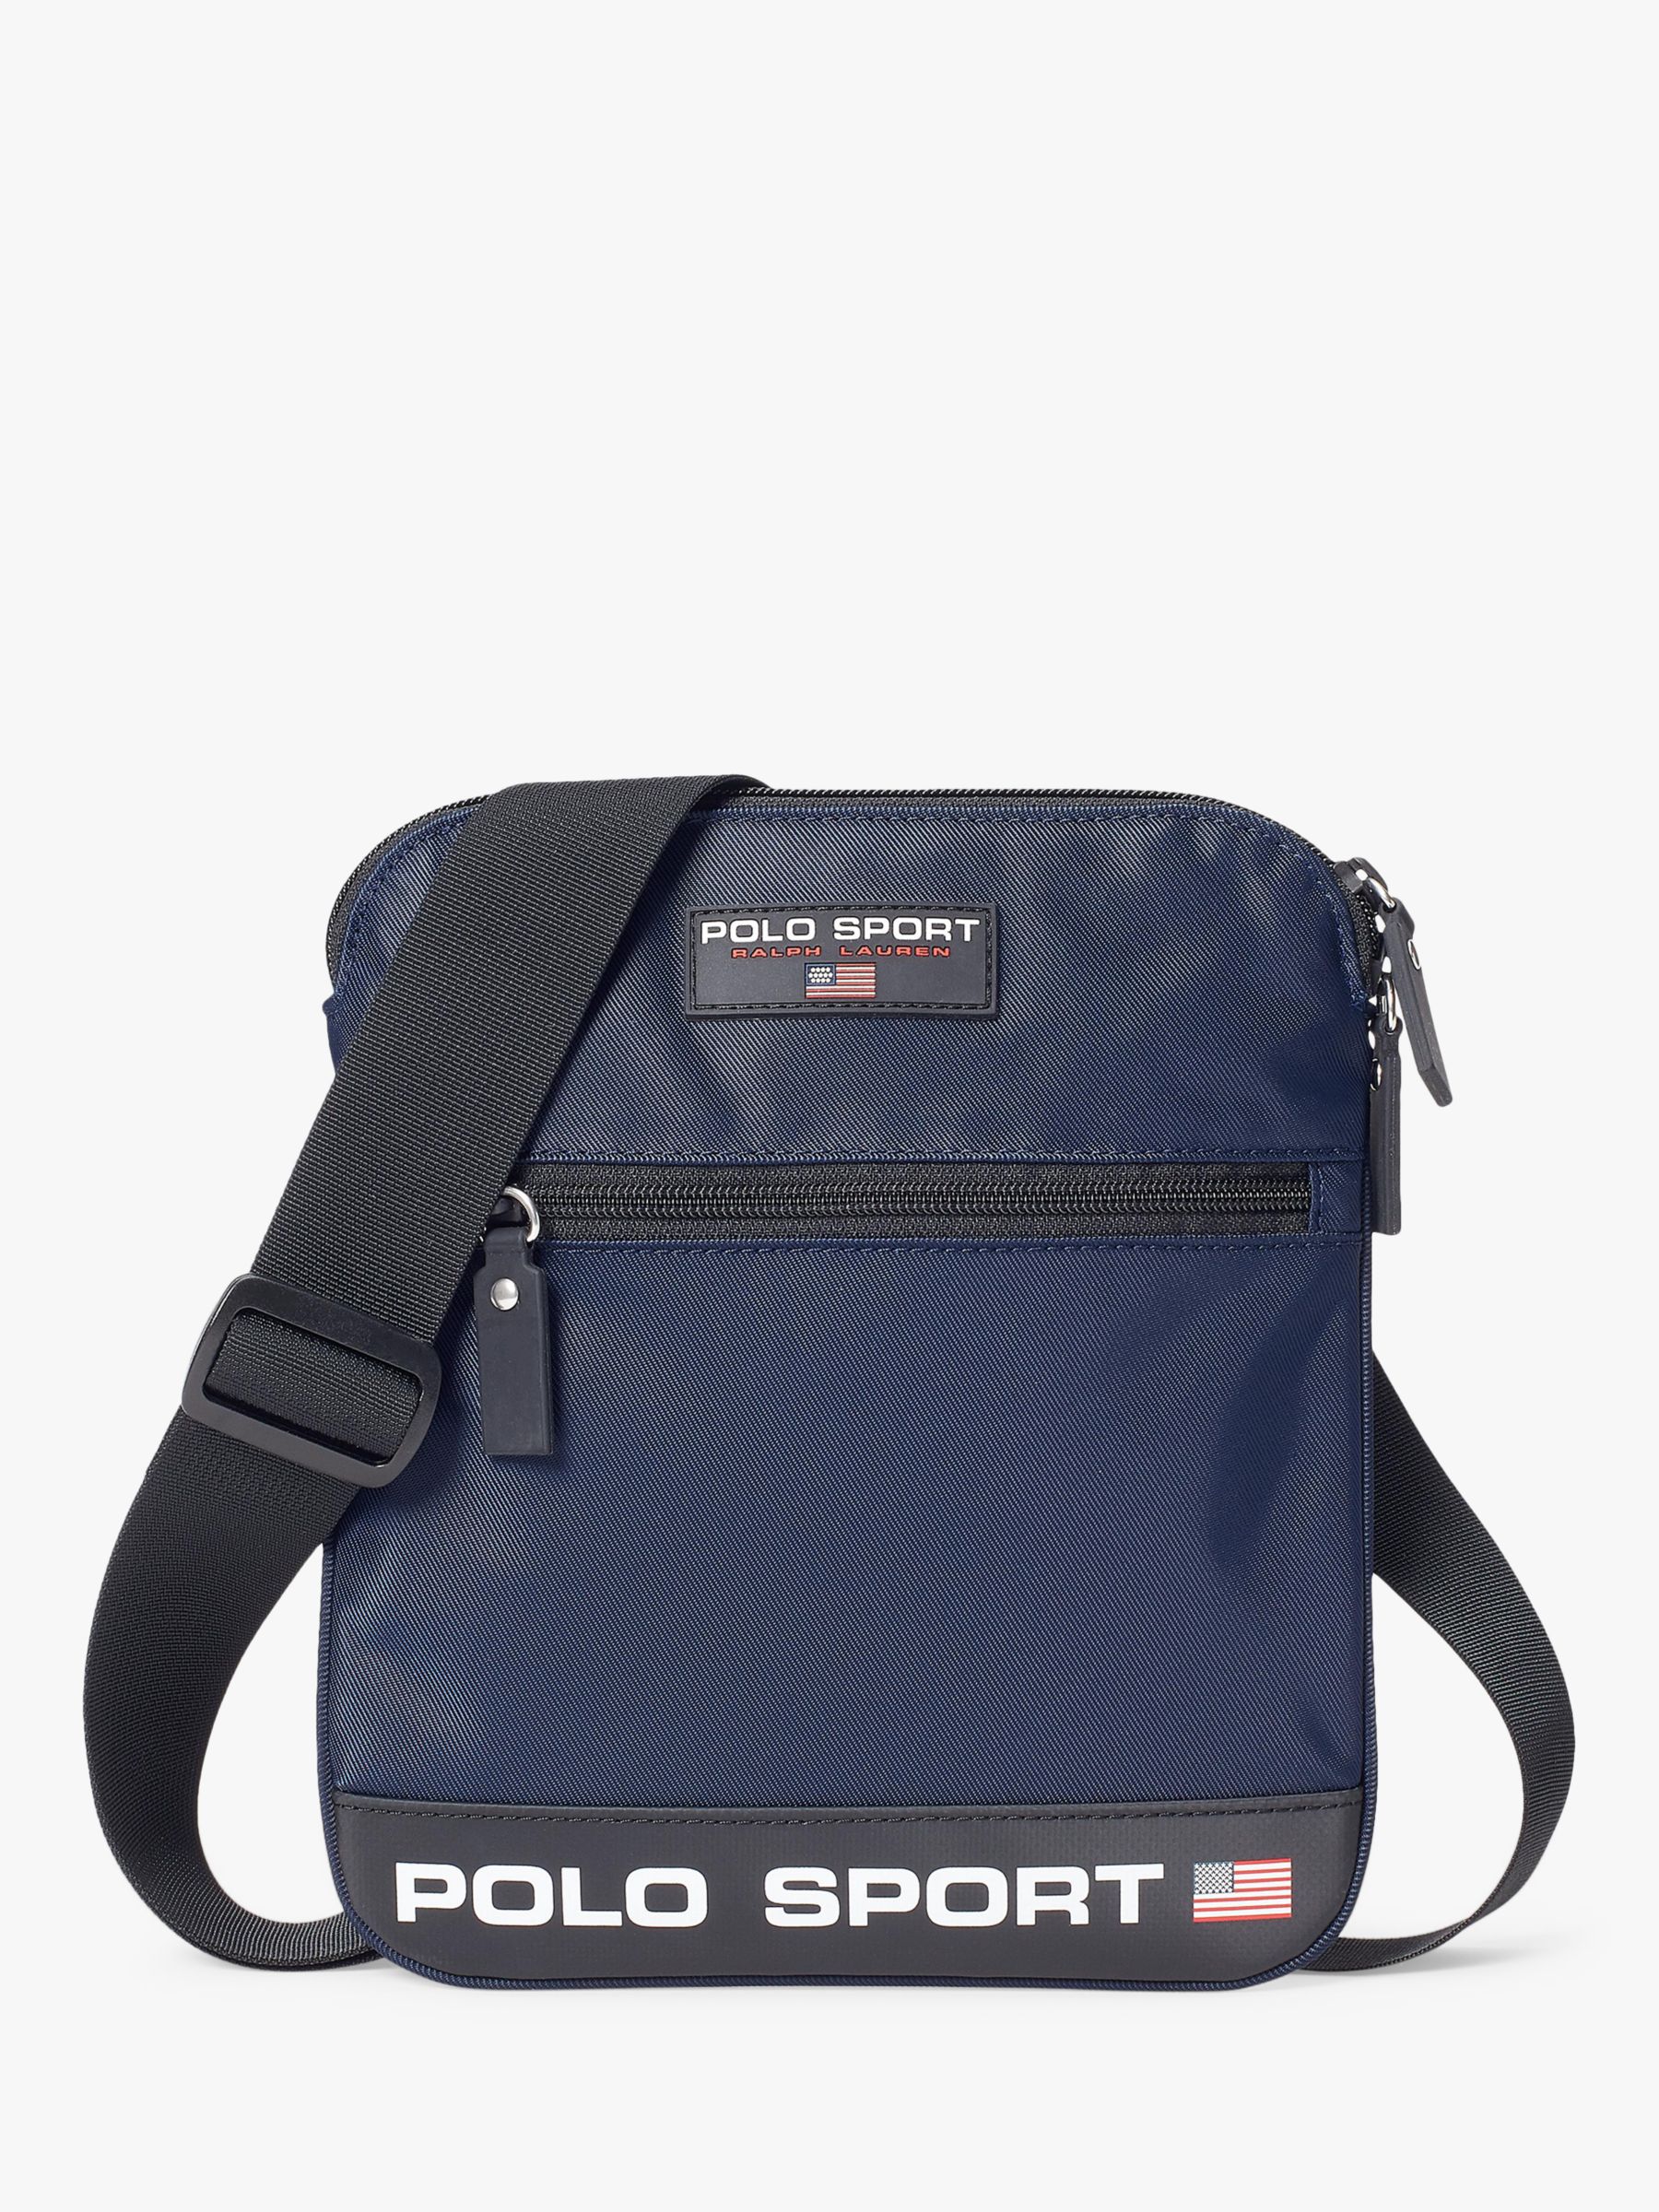 polo sport crossbody bag